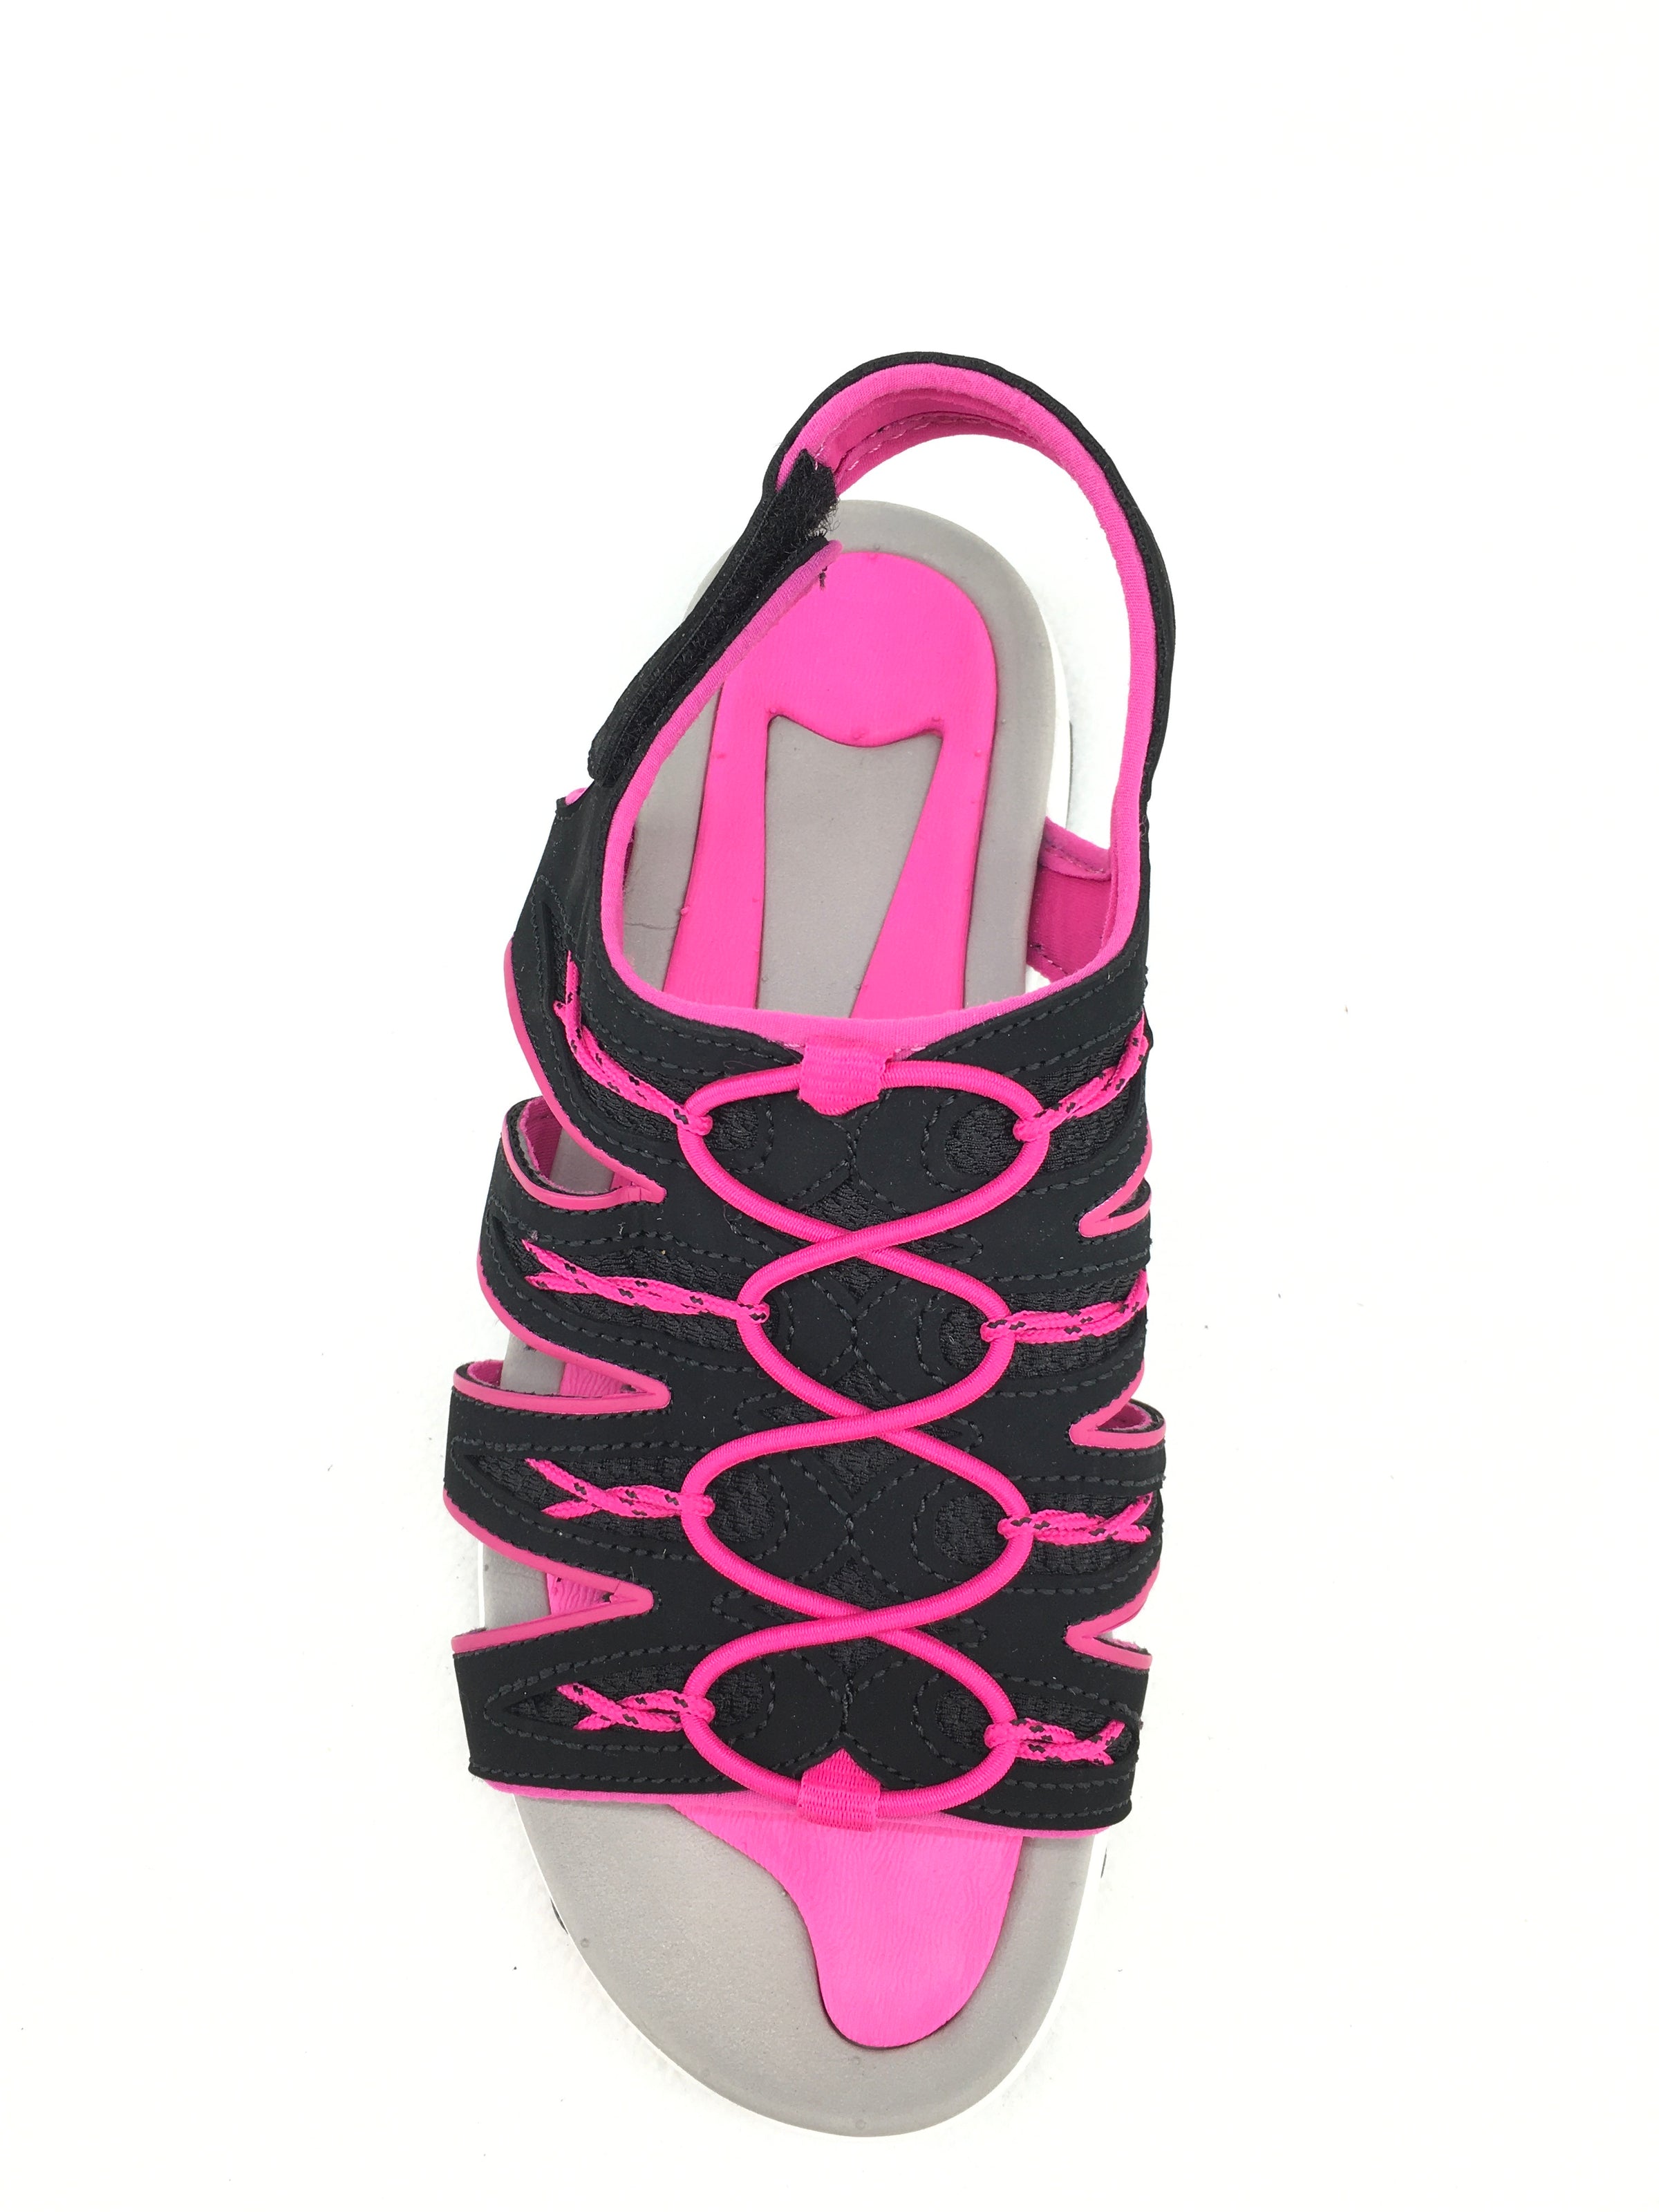 Ryka Comfort Sandals Size 7W